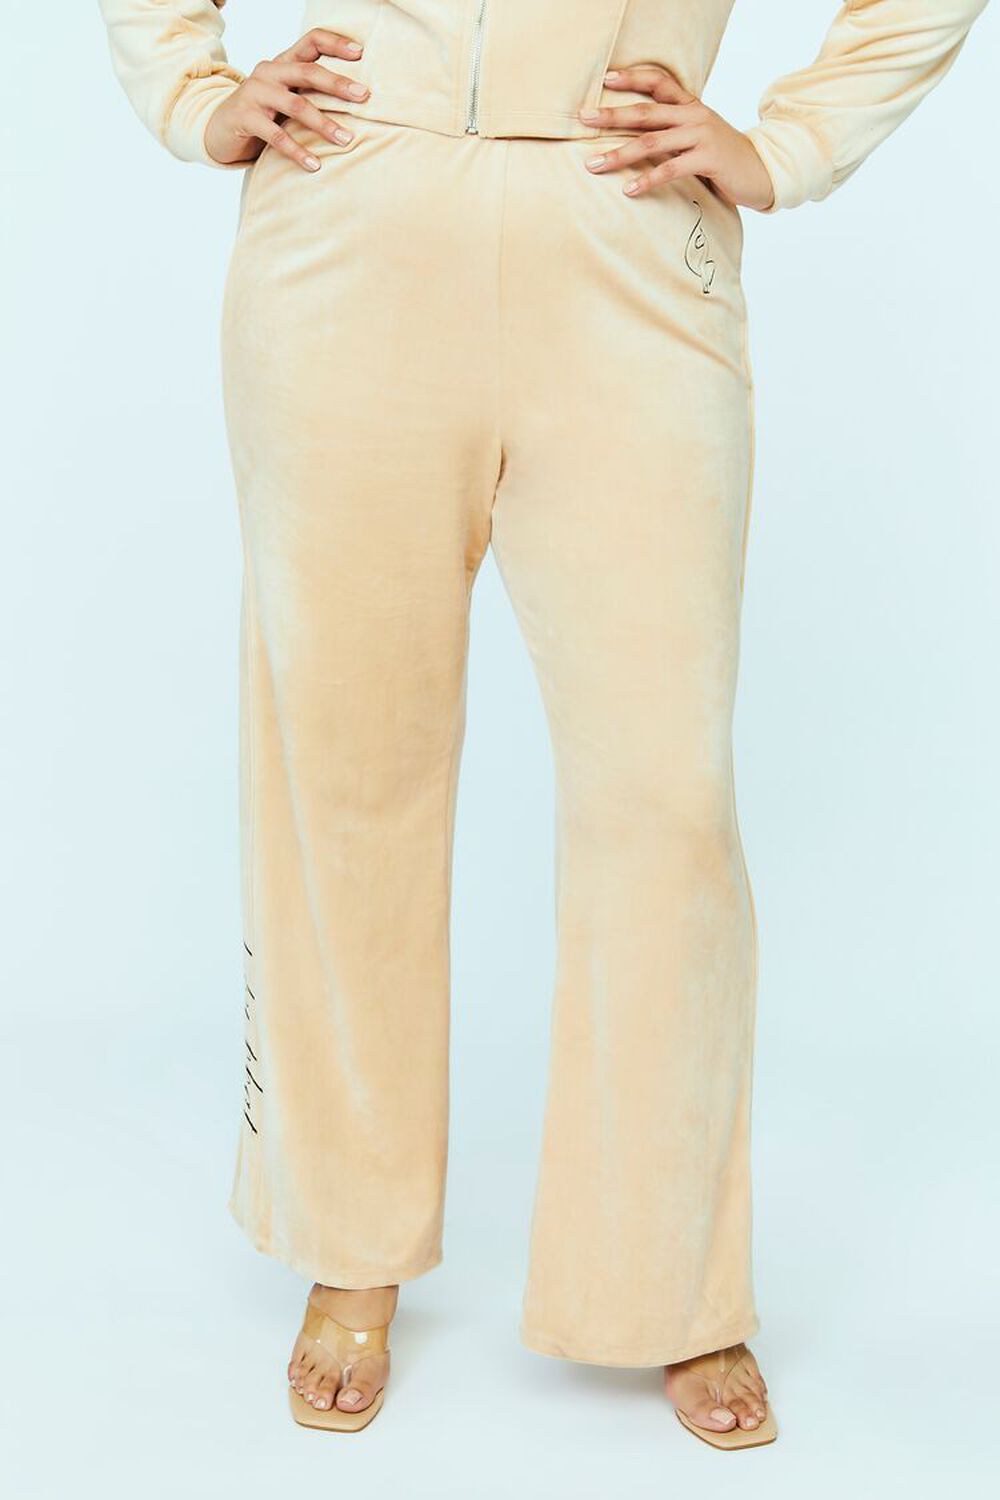 TAN/MULTI Plus Size Baby Phat Velvet Flare Pants, image 2